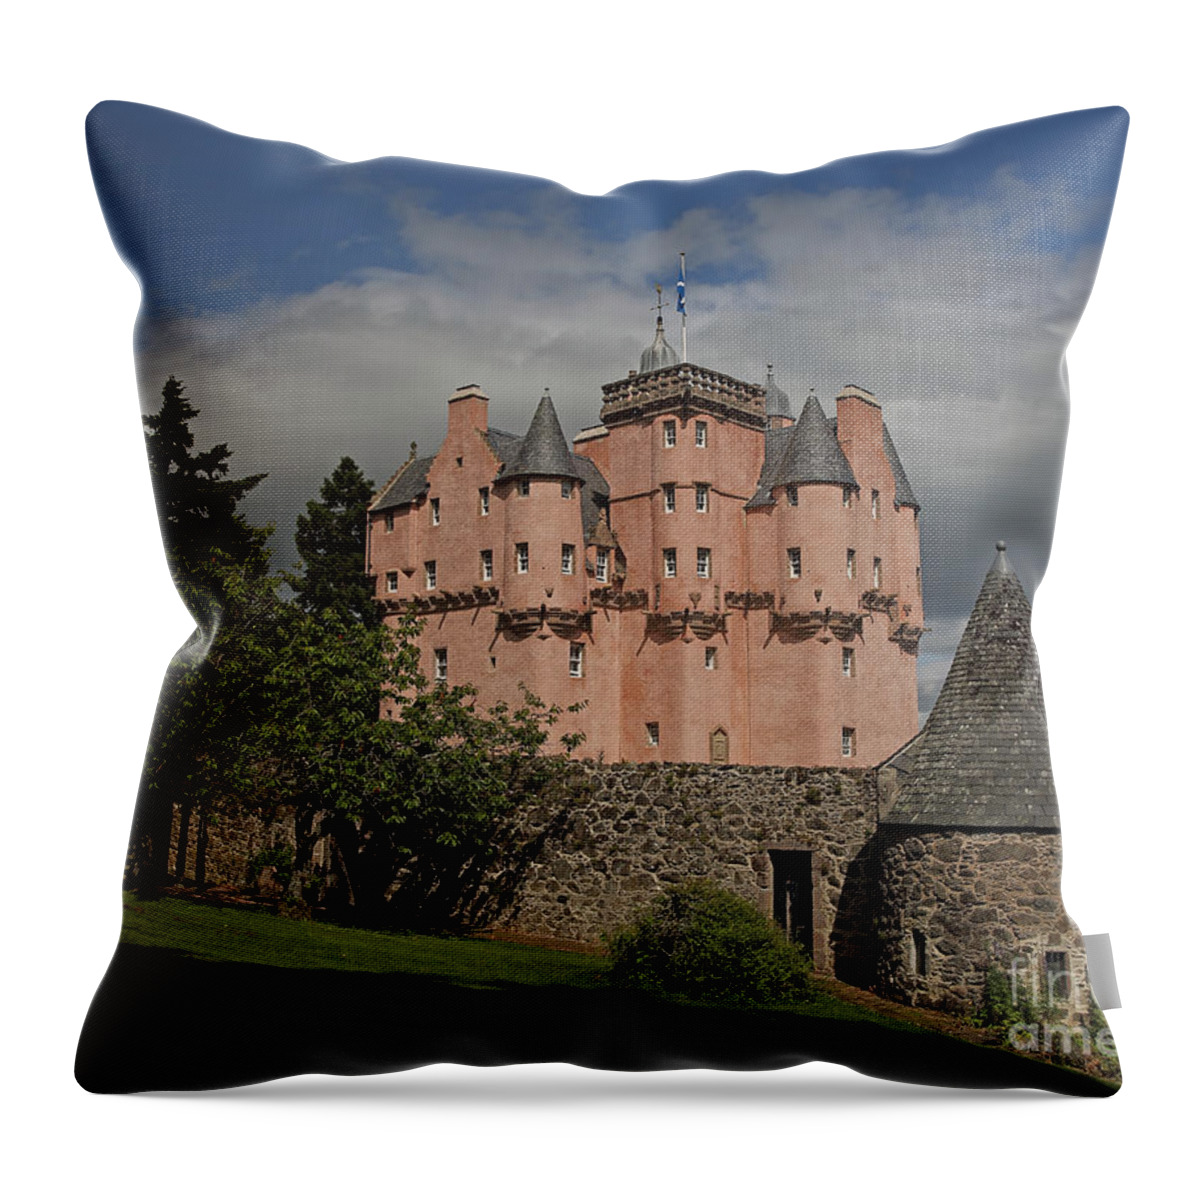 Craigievar Castle Throw Pillow featuring the photograph Craigievar Castle #2 by Maria Gaellman